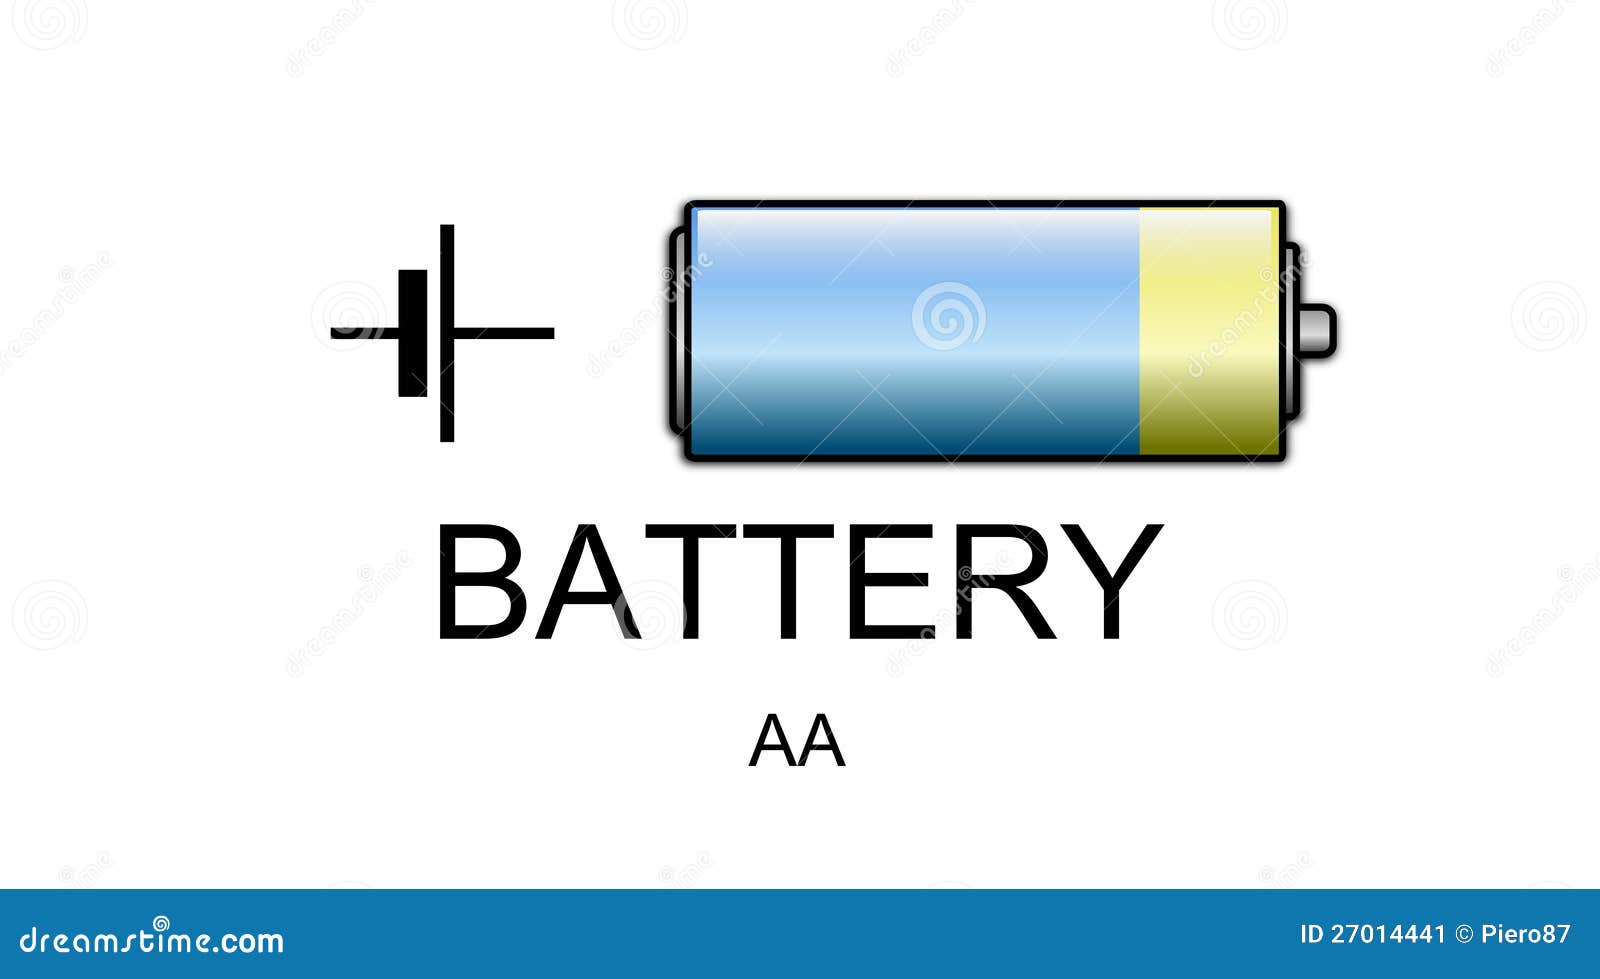 Image Result For Battery Electrical Symbol